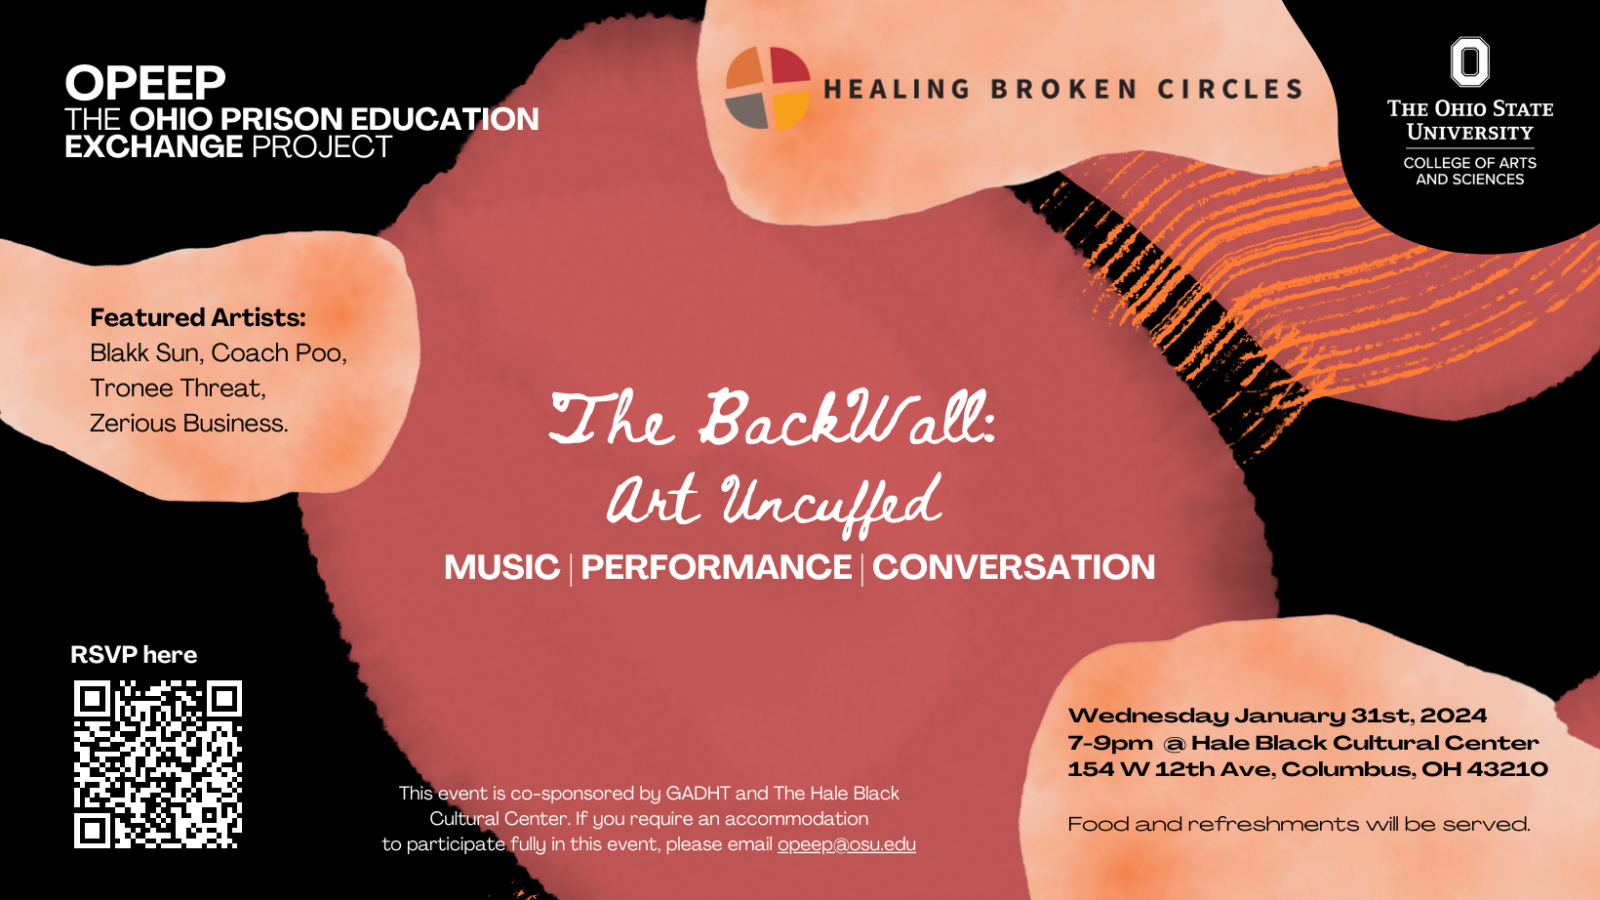 The Back Wall Healing Broken Circles Event Poster